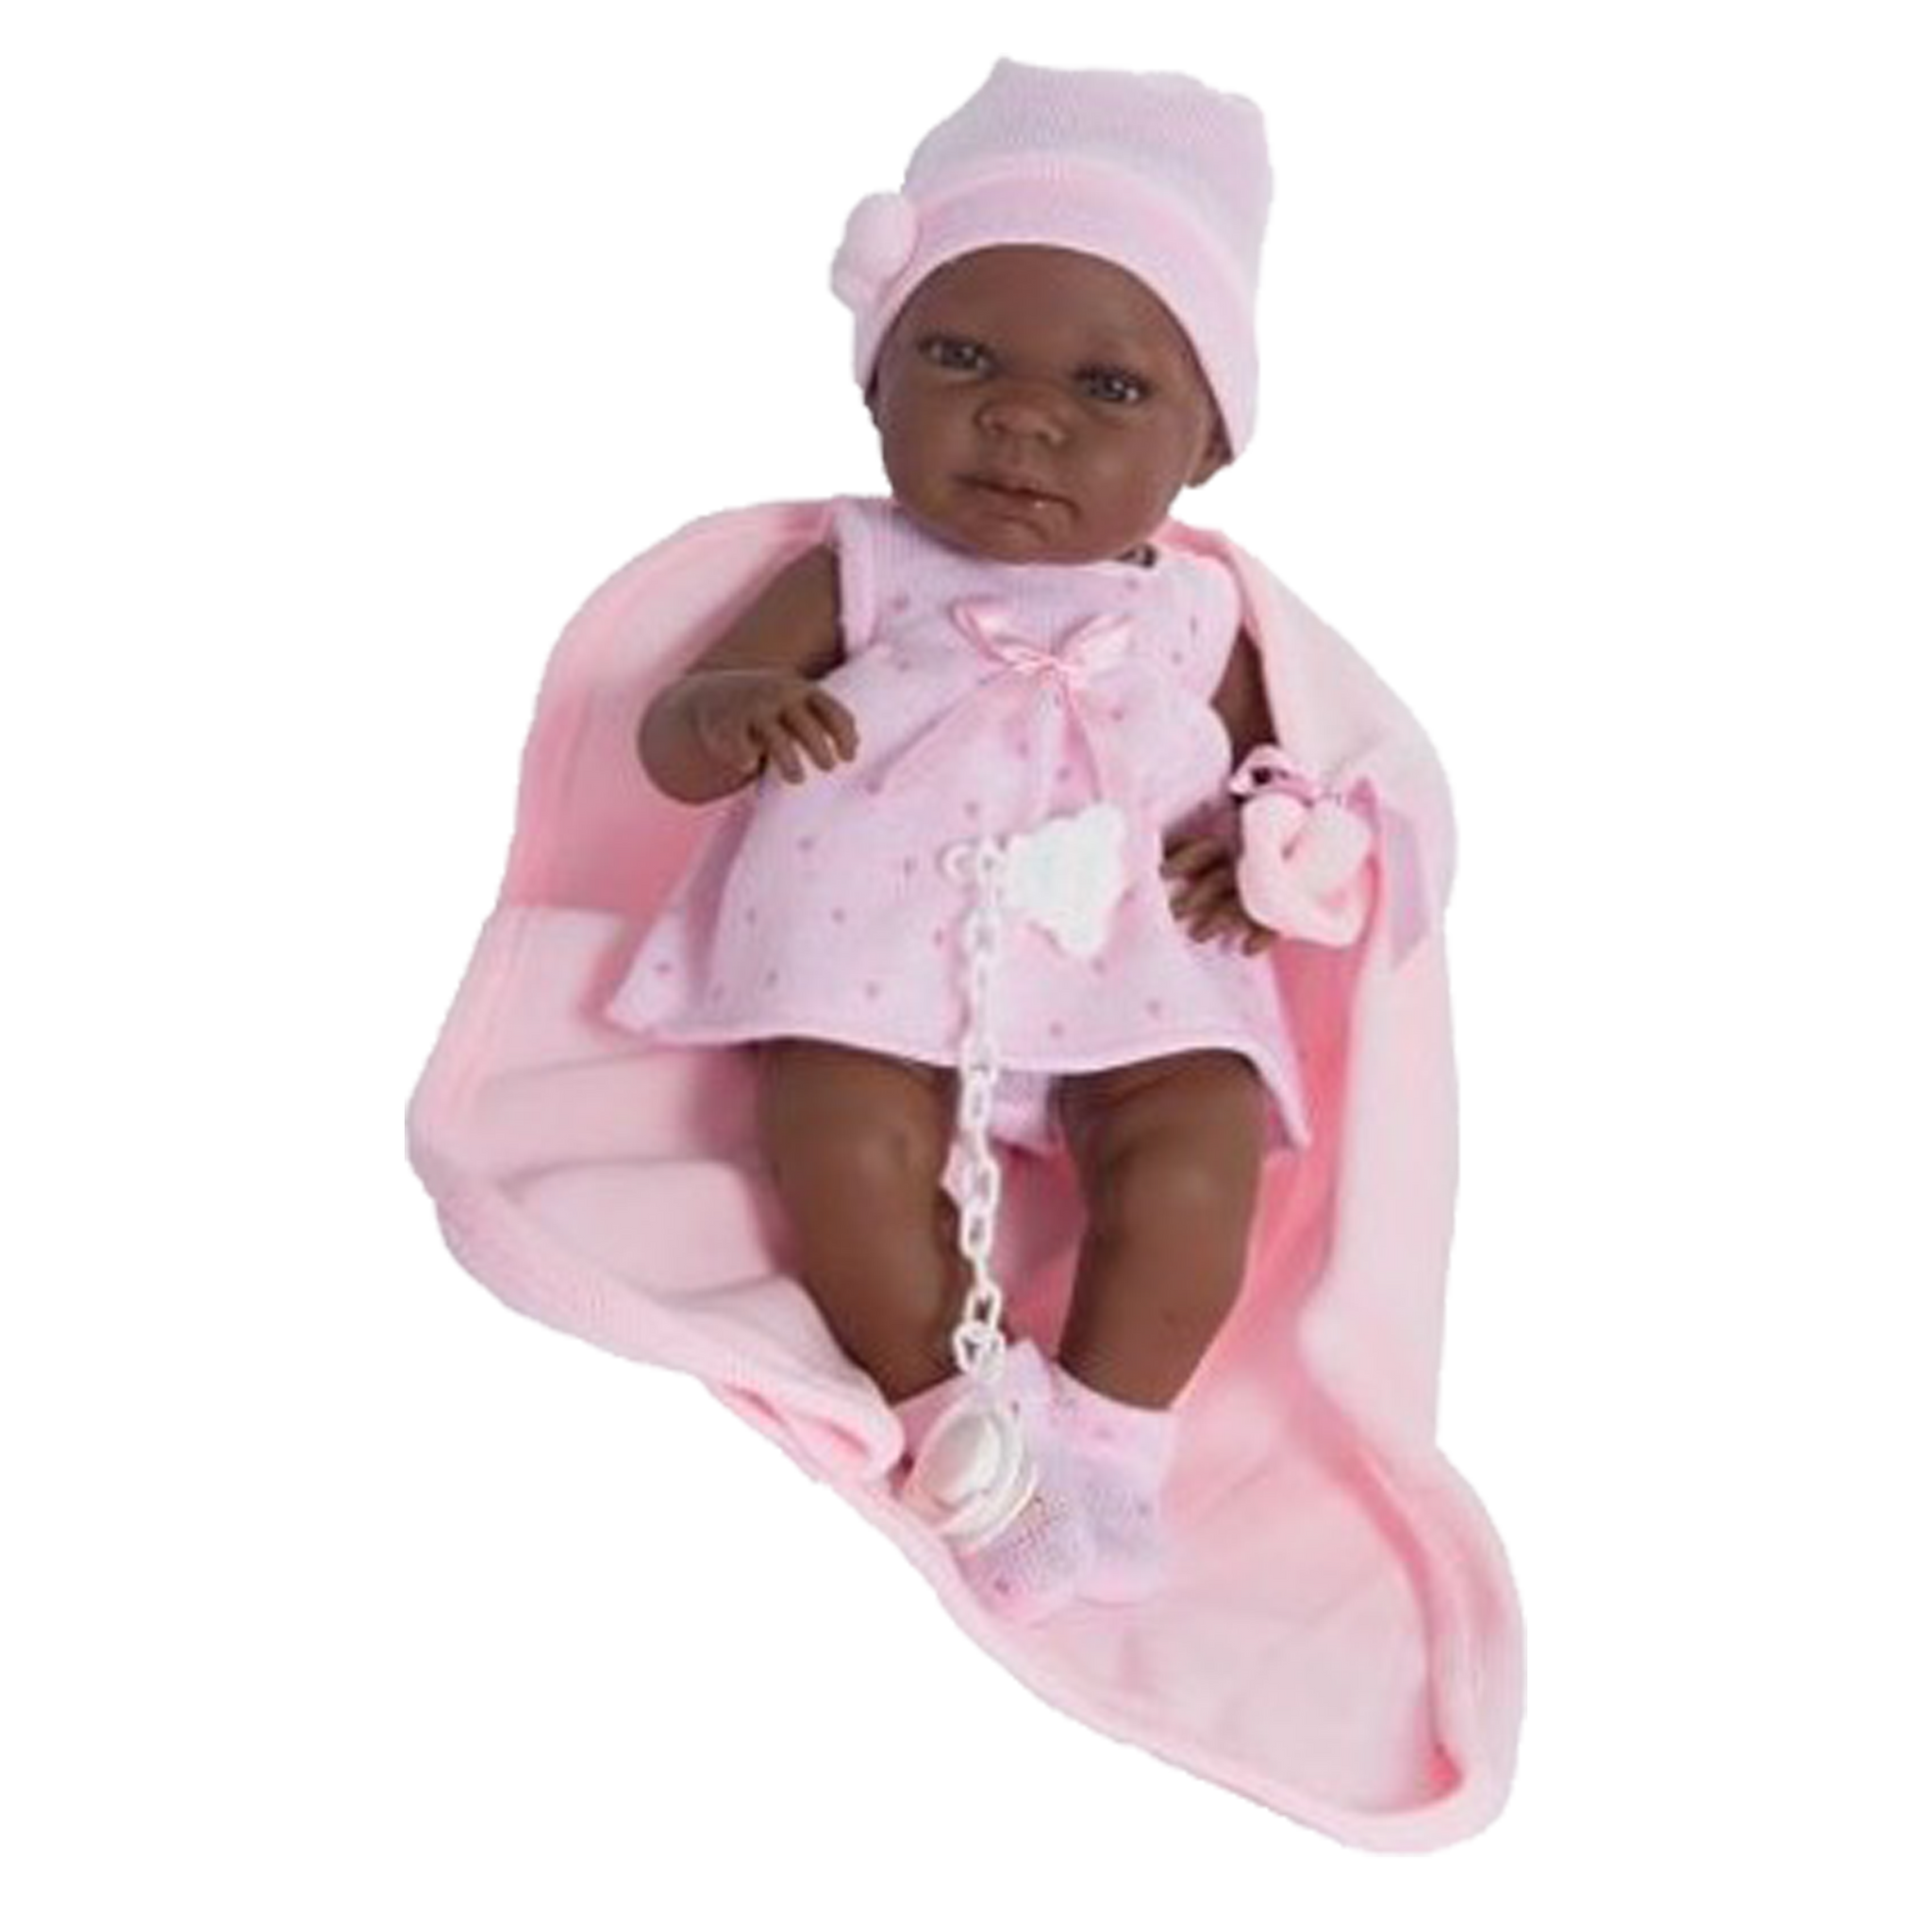 Newborn Baby Doll - Baby Semone 38cm 50%OFF